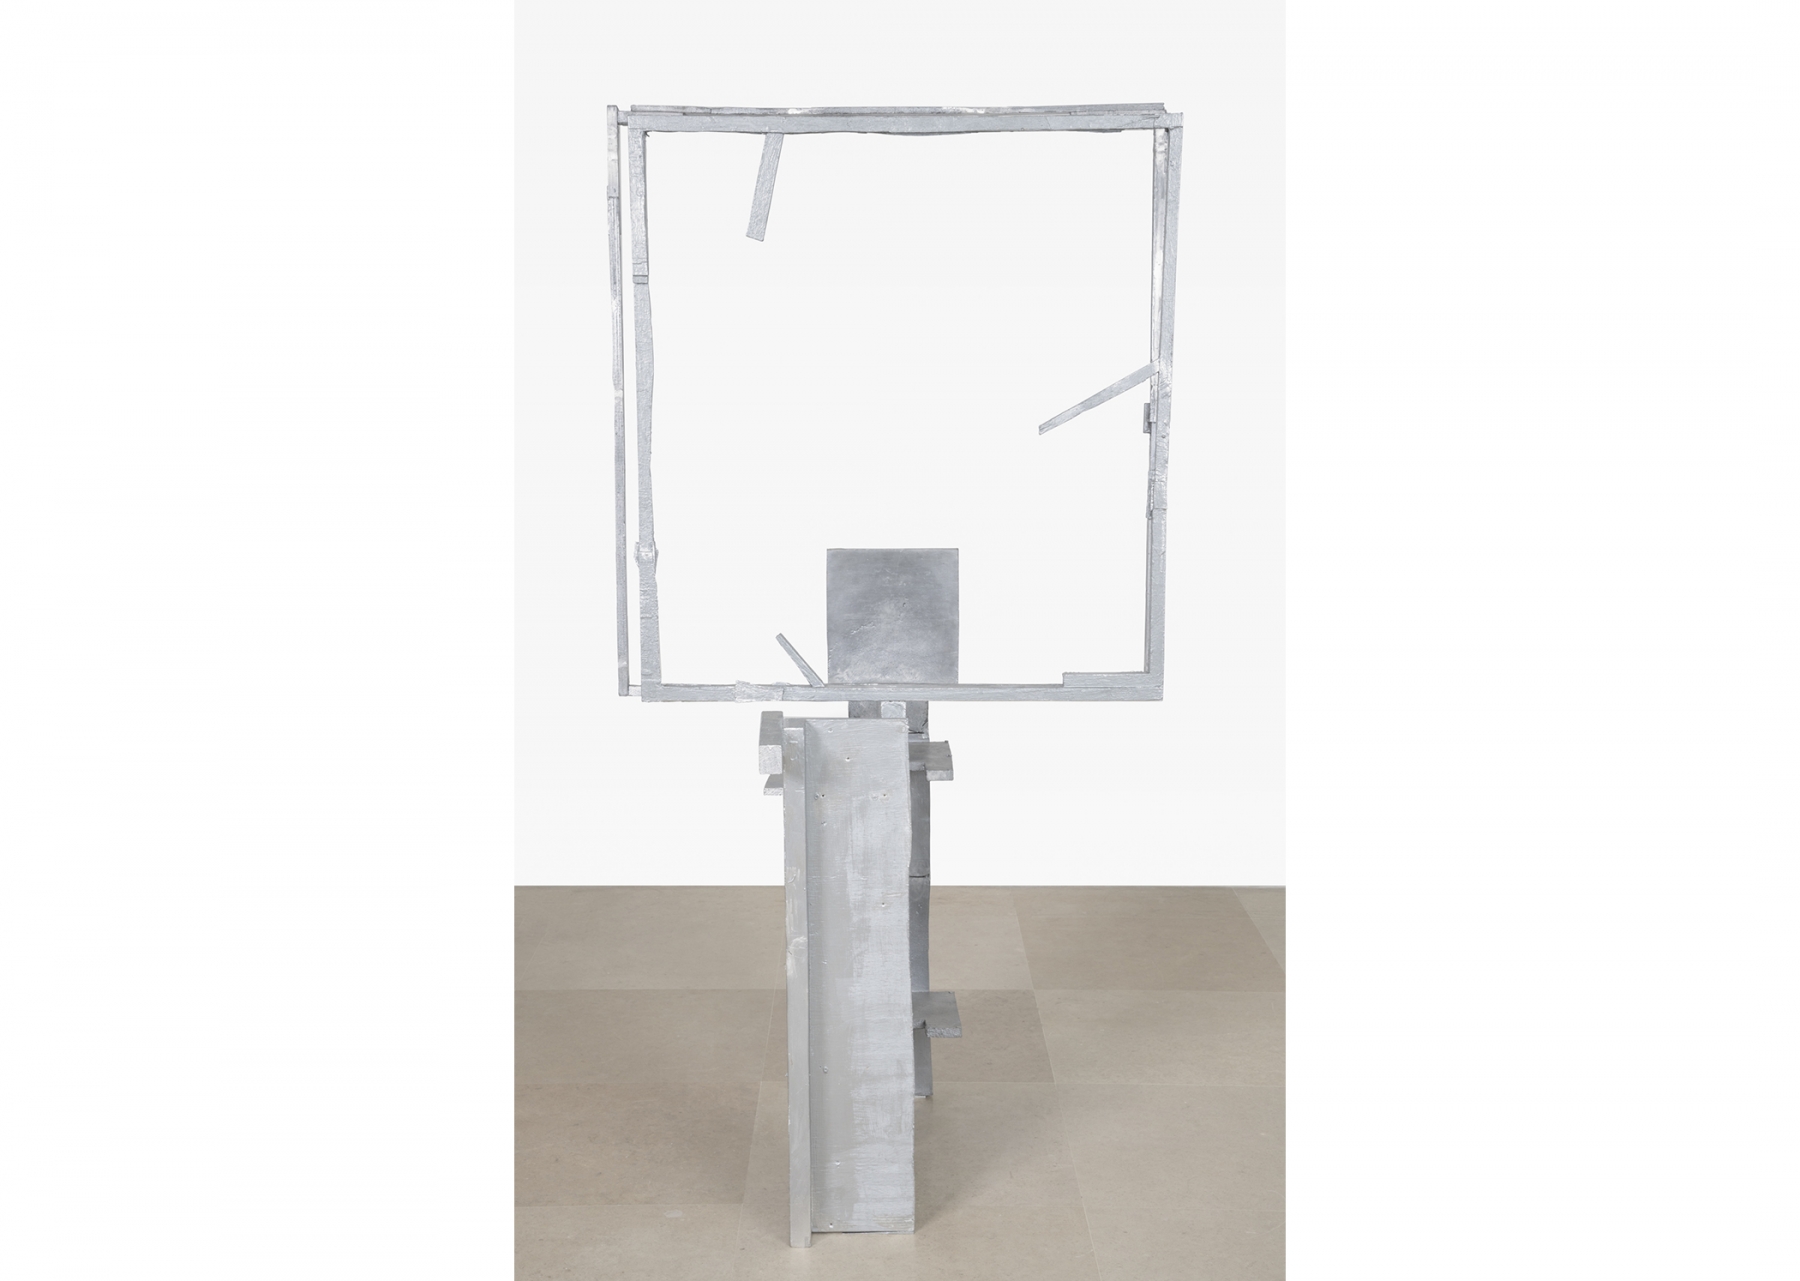 Gedi Sibony

Signs of Encounter, 2019-20

Cast aluminum, painted wood, metal screws

77 x 40 x 36 1/2 inches (195.6 x 101.6 x 92.7 cm) each